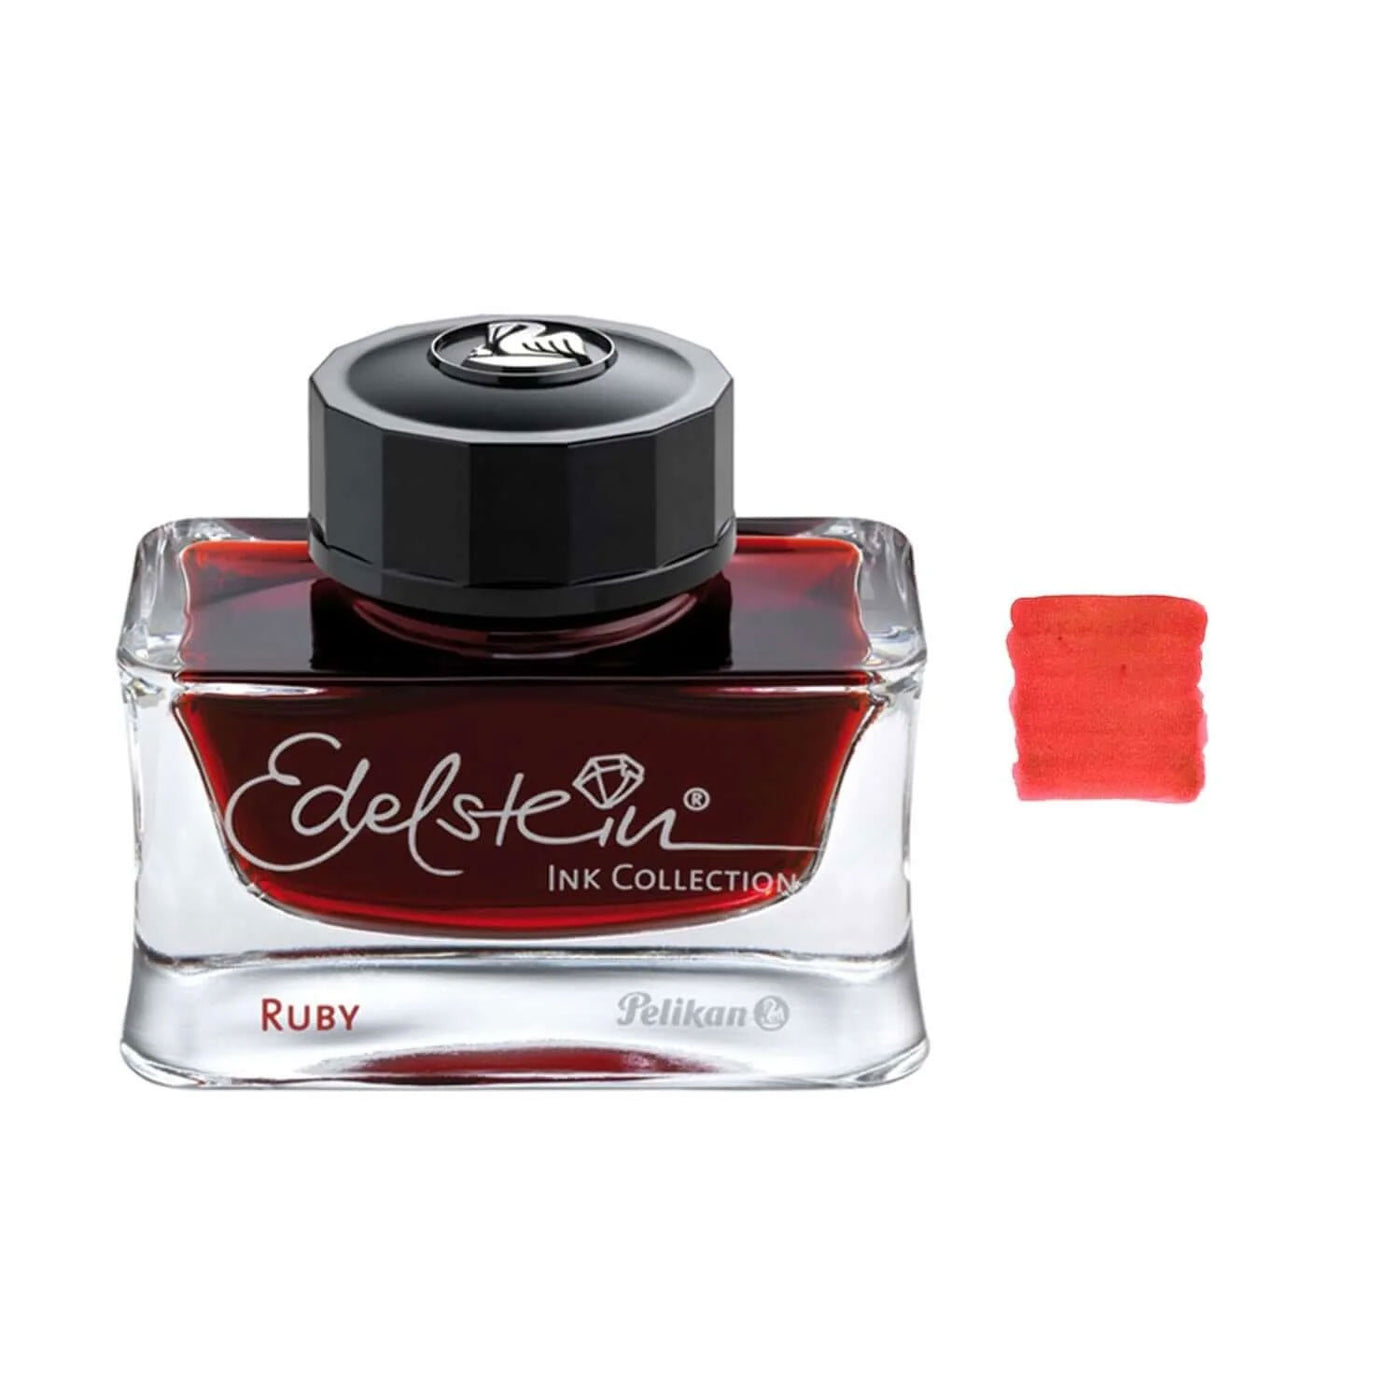 Pelikan Edelstein Ink Bottle, Ruby (Red) - 50ml